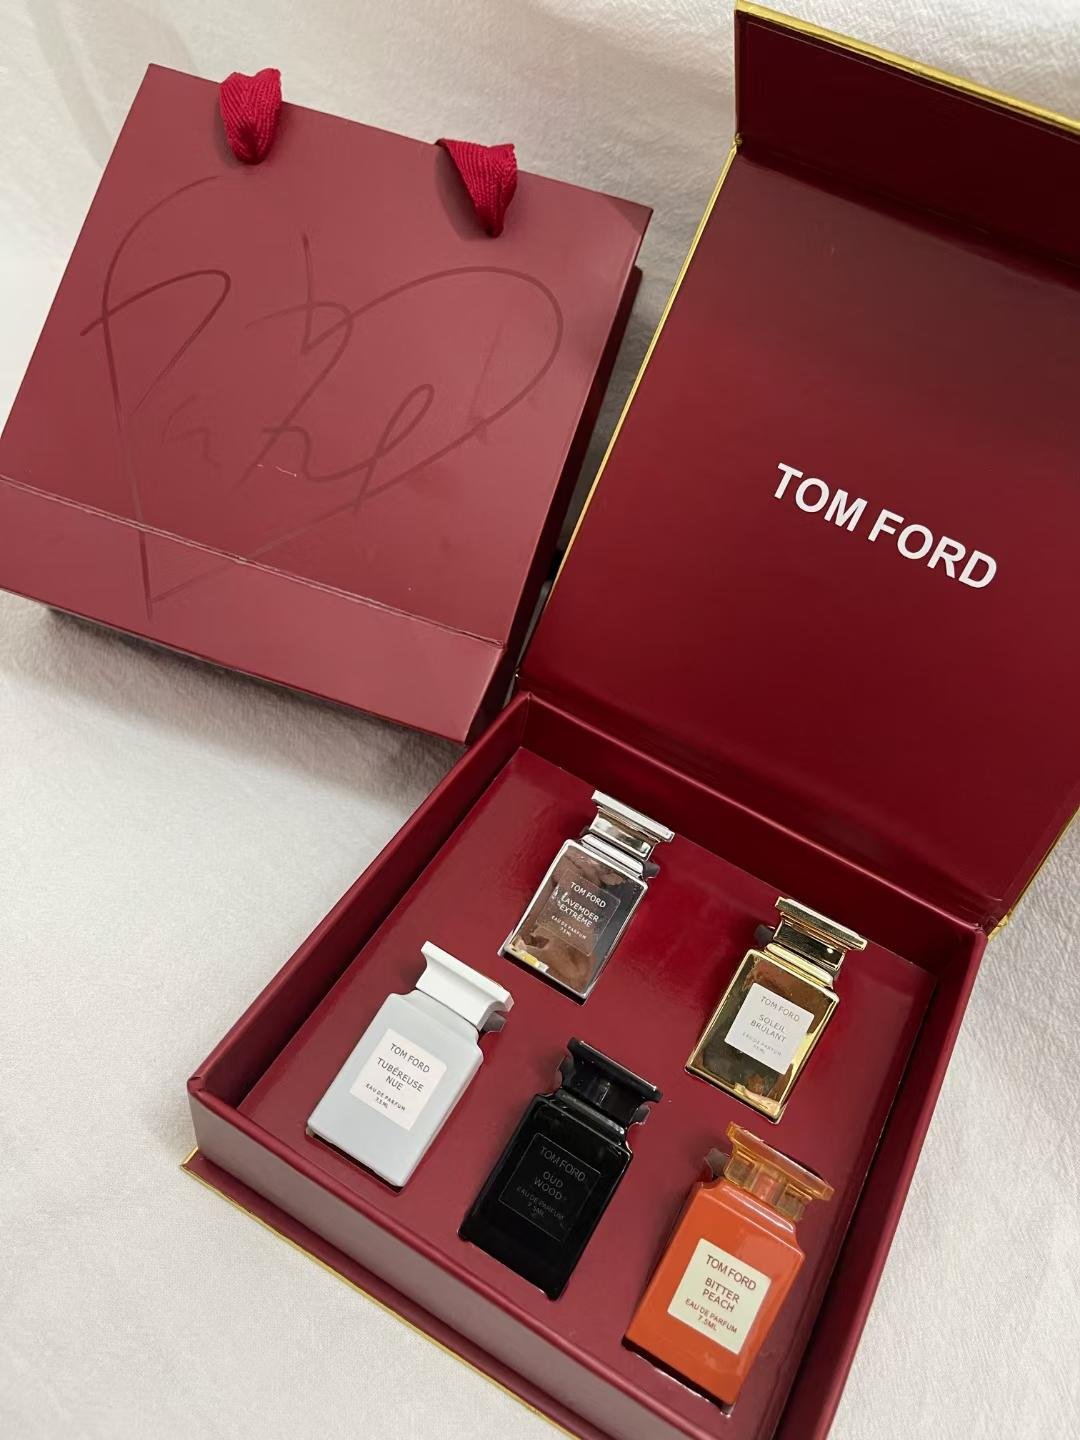 Factory price Tom ford perfume gift set brand perfume set 1